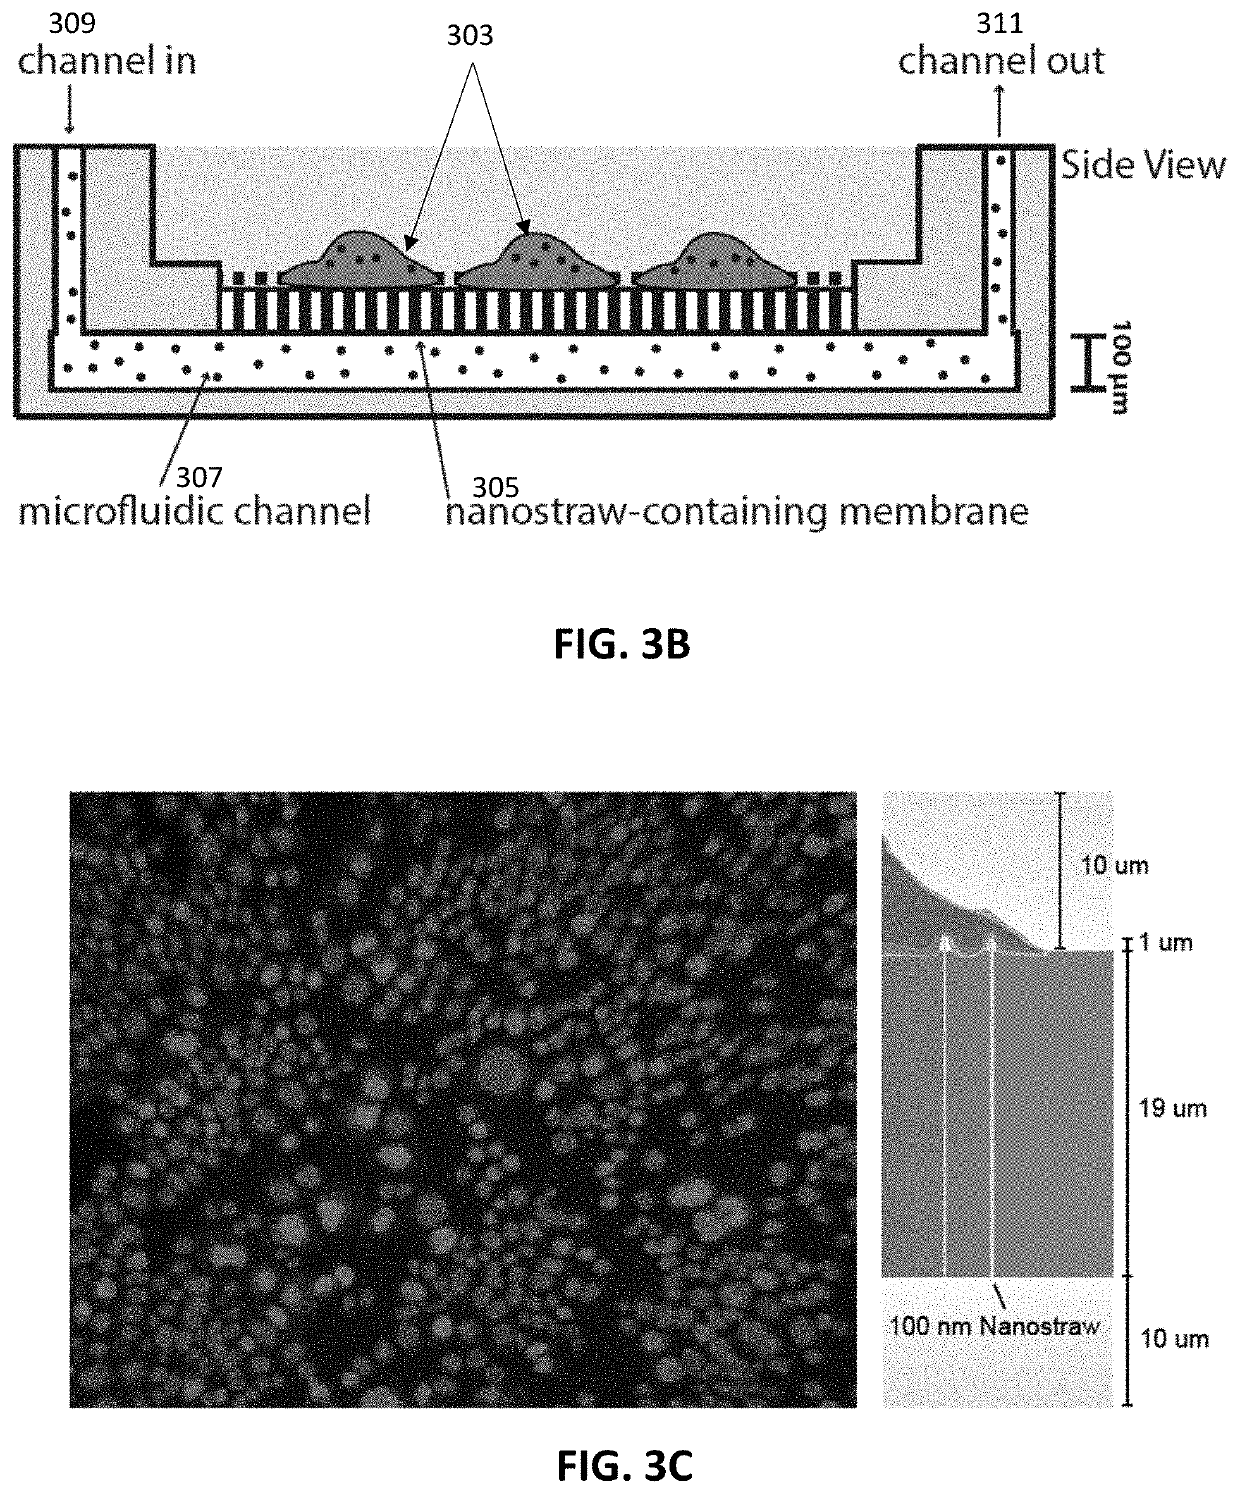 Nanostraws methods and apparatuses